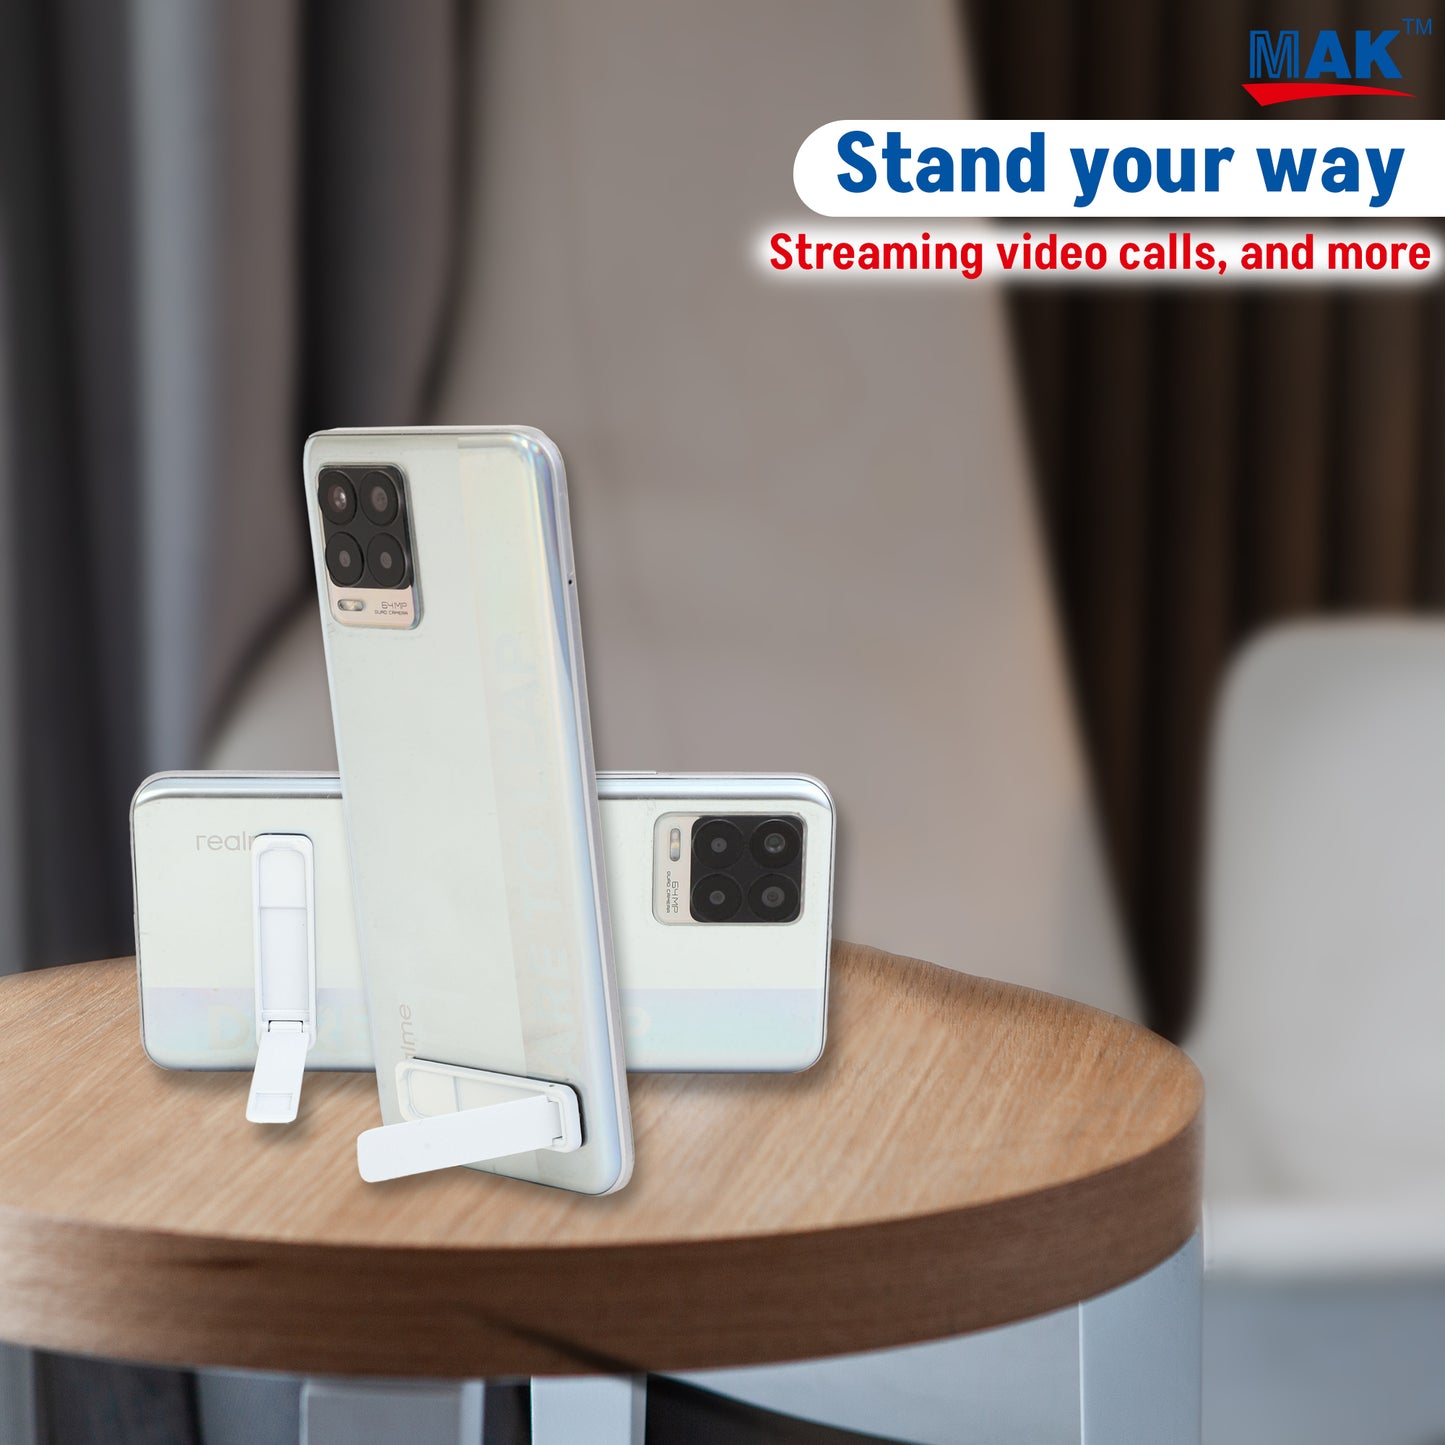 Phone Kickstand, Vertical and Horizontal Stand, Adjustable Angle (White)